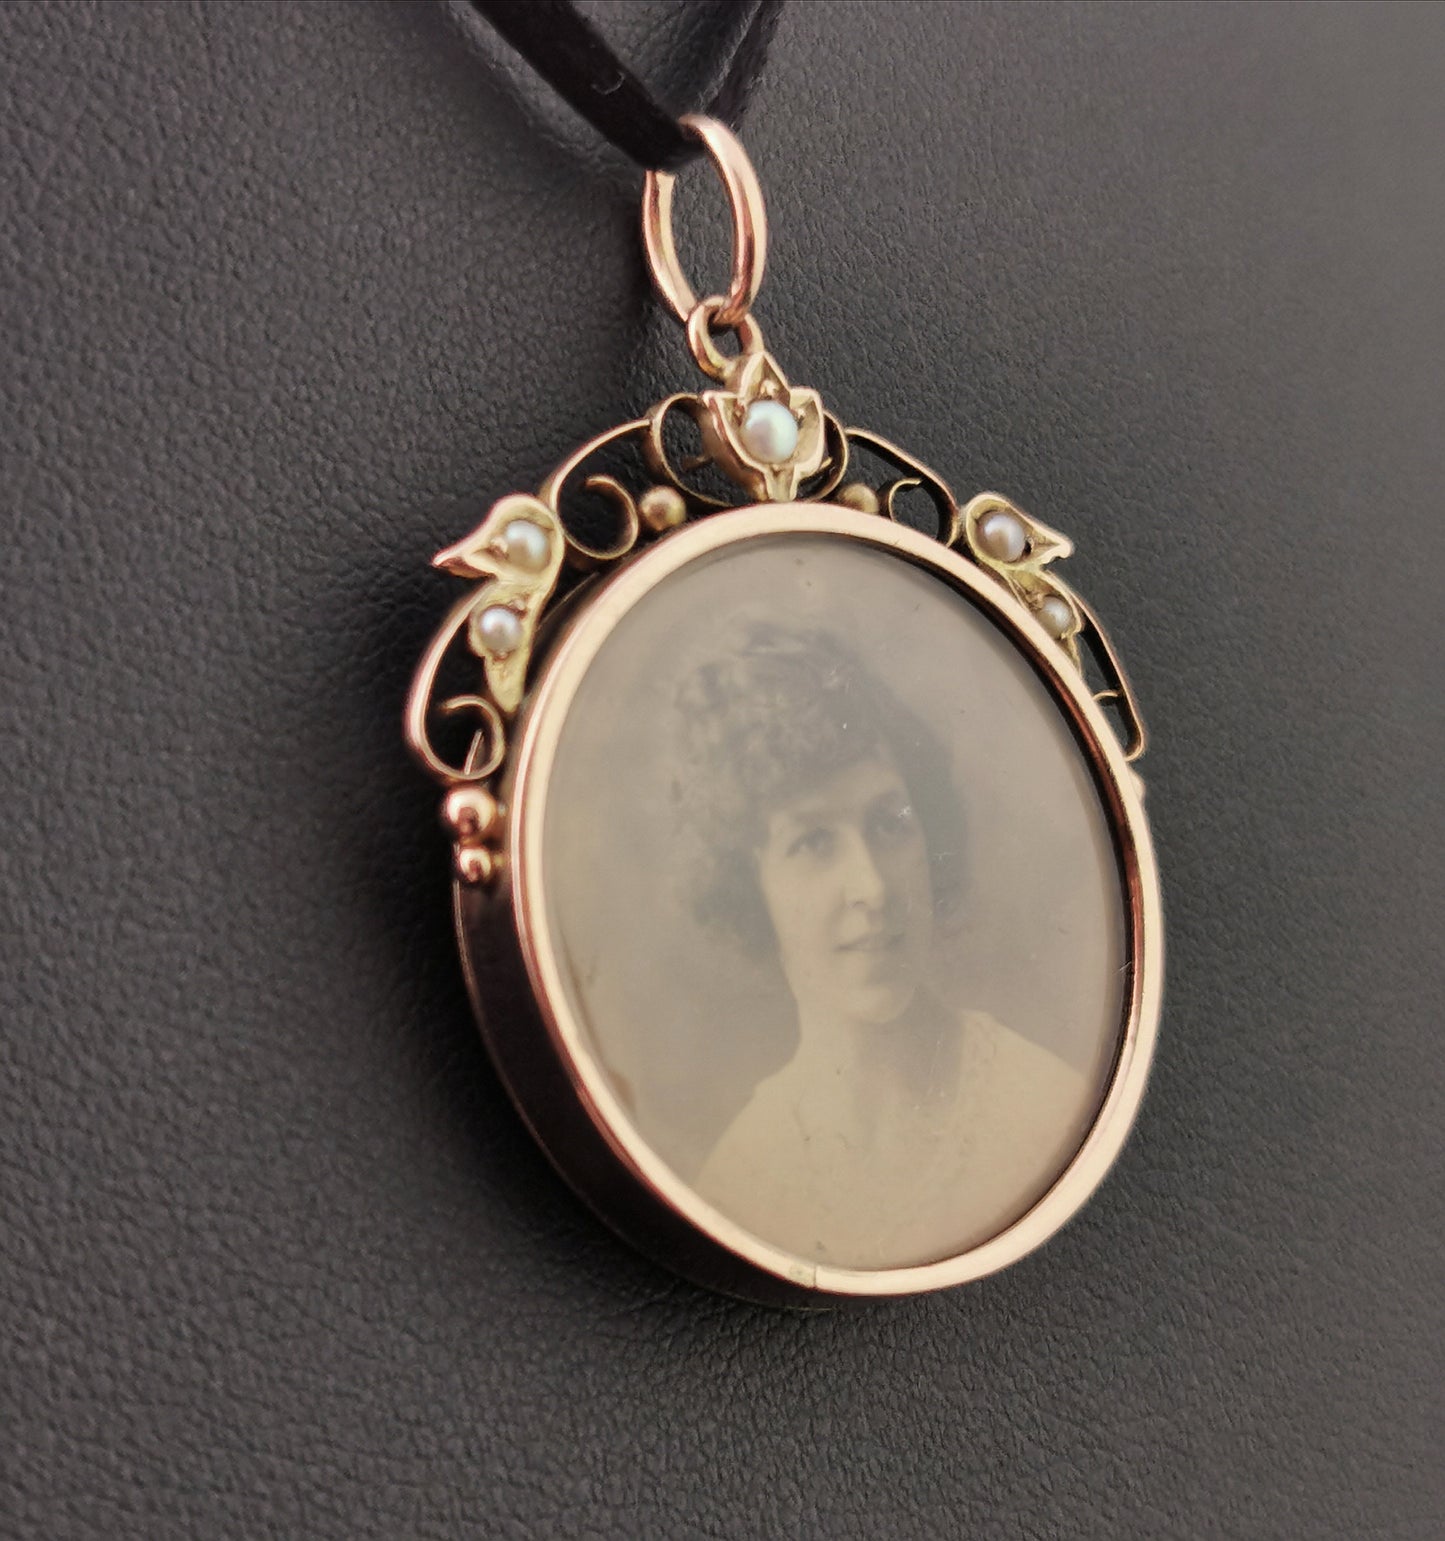 Antique 9ct gold locket, seed pearl, Edwardian pendant